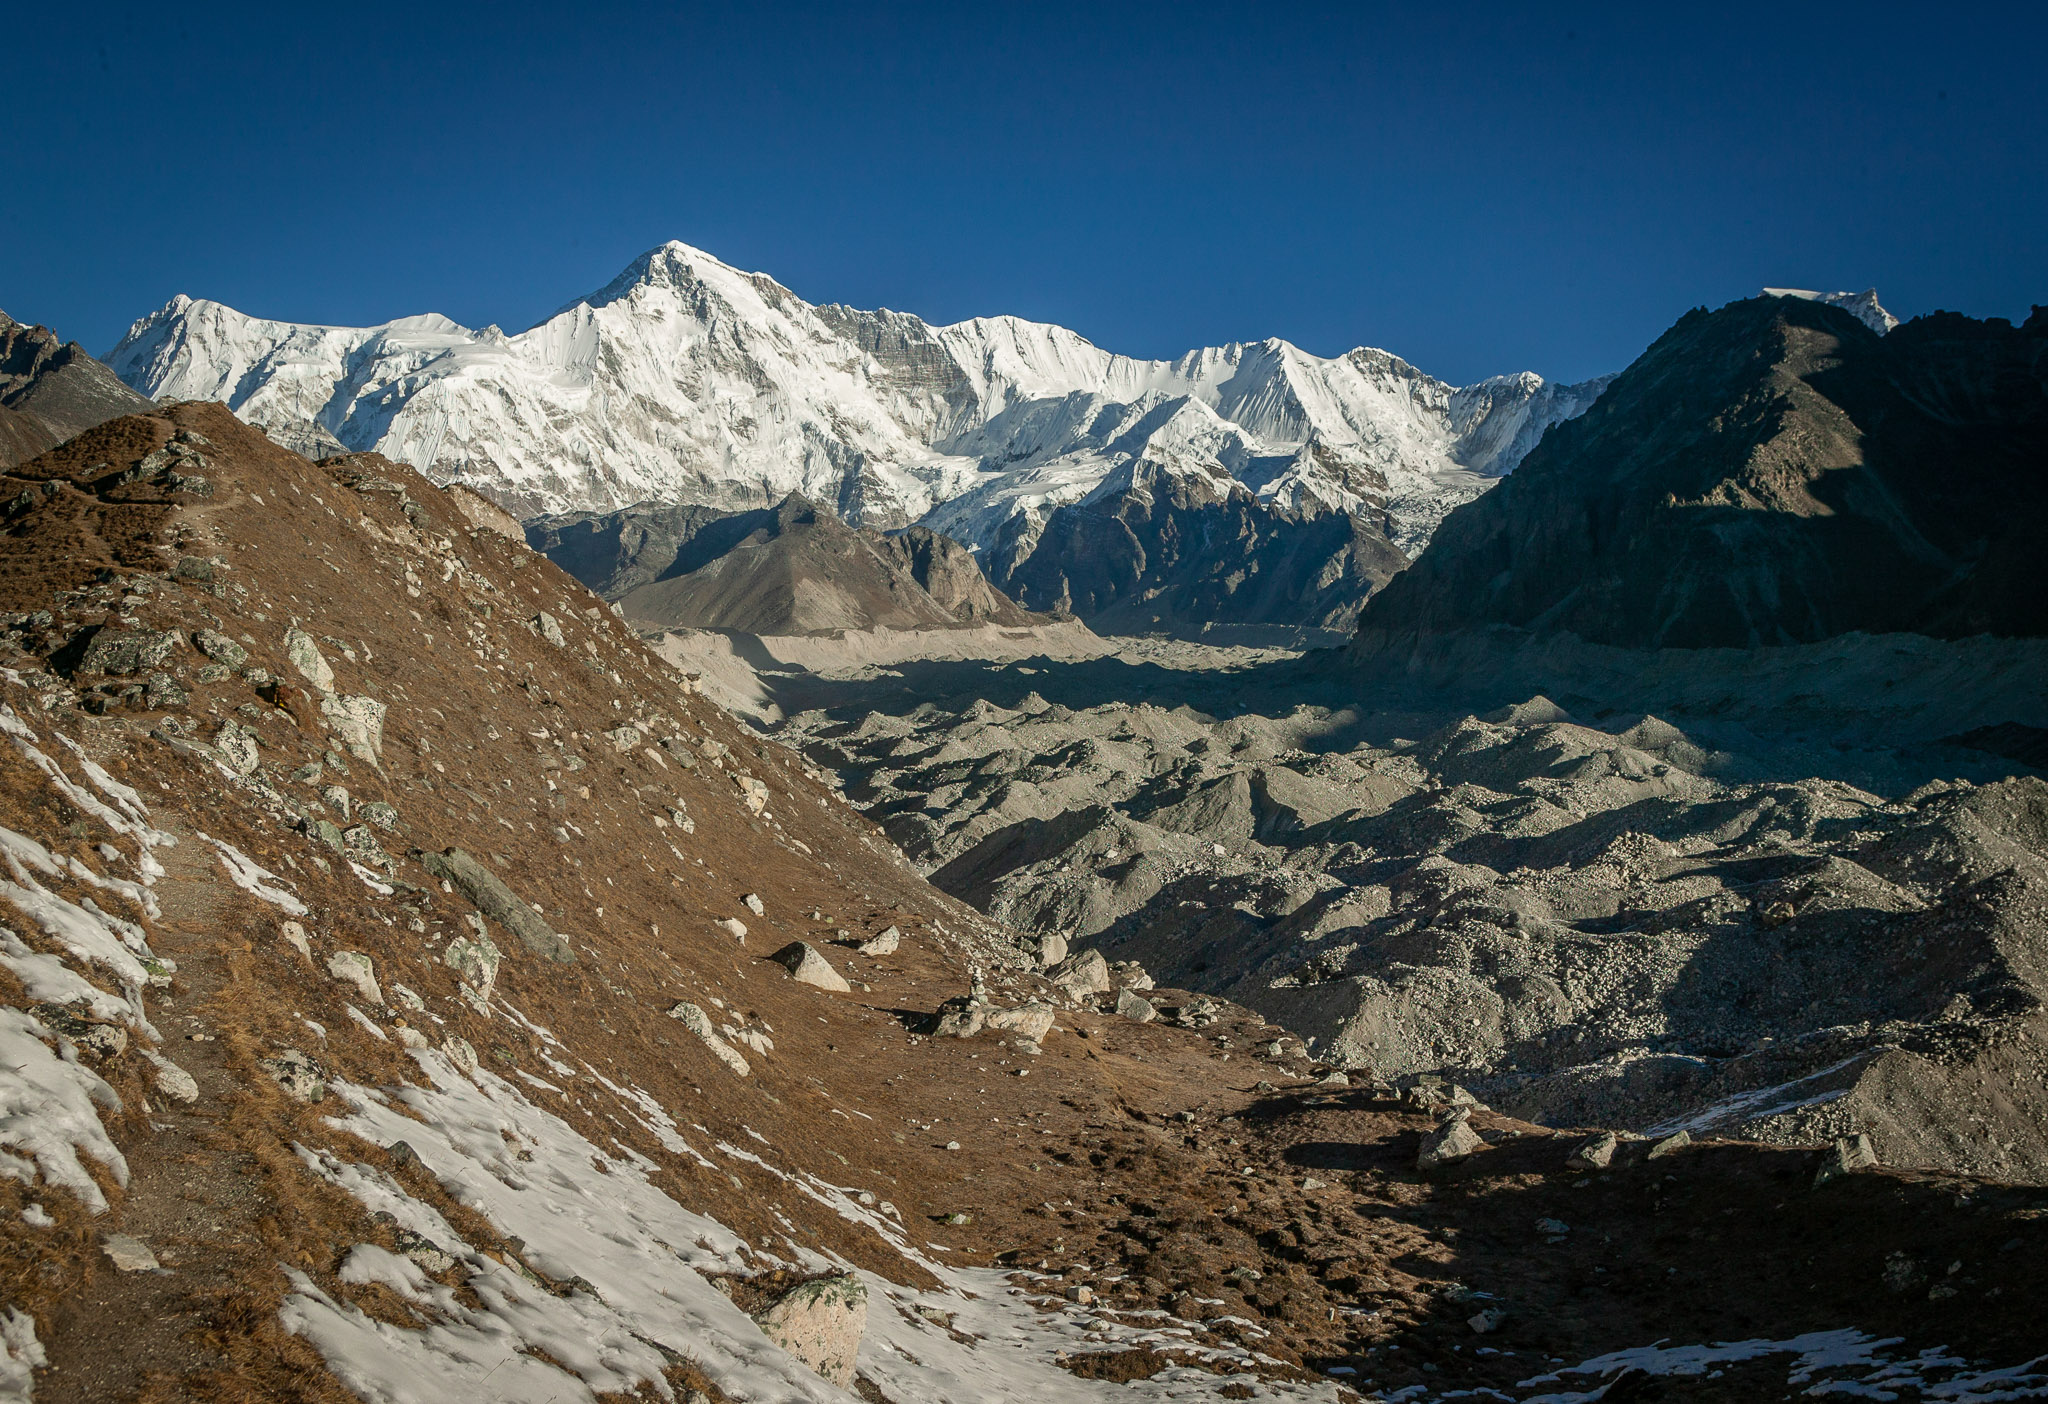 Ngozumpa Glacier (largest glacier in Nepal) and Cho Oyu